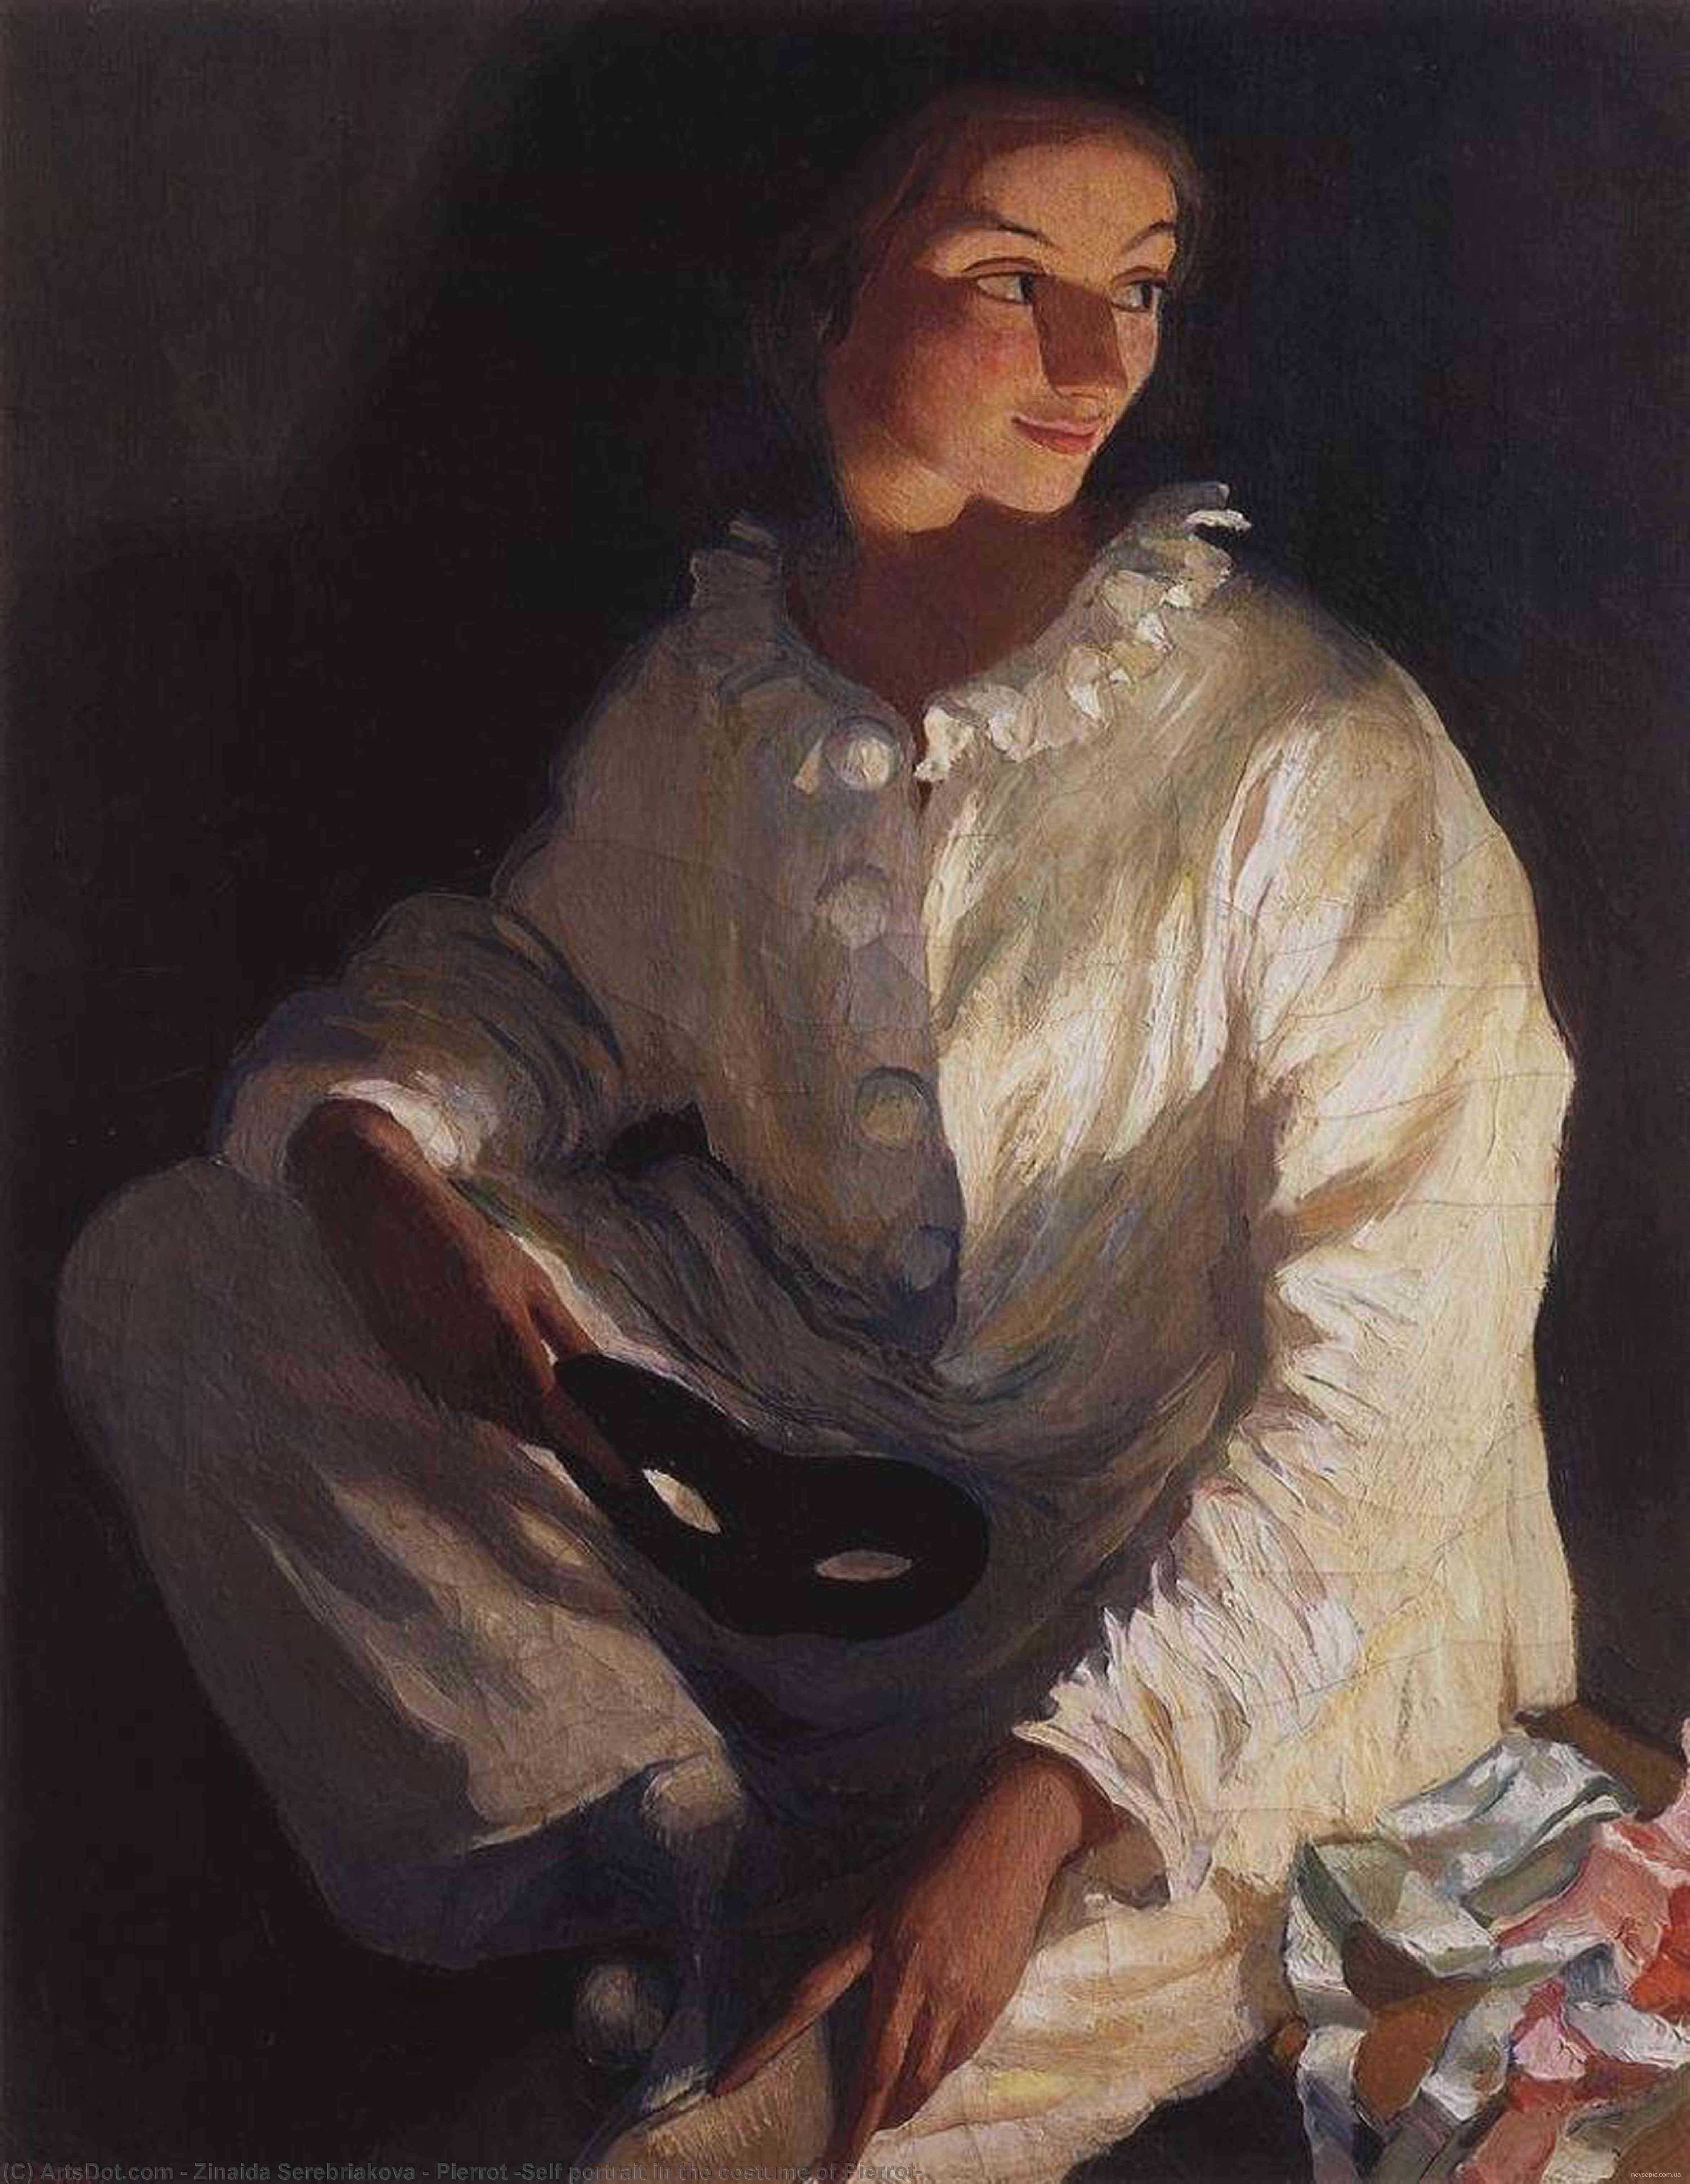 Find out more about Zinaida Serebriakova - Self portrait in the costume of Pierrot